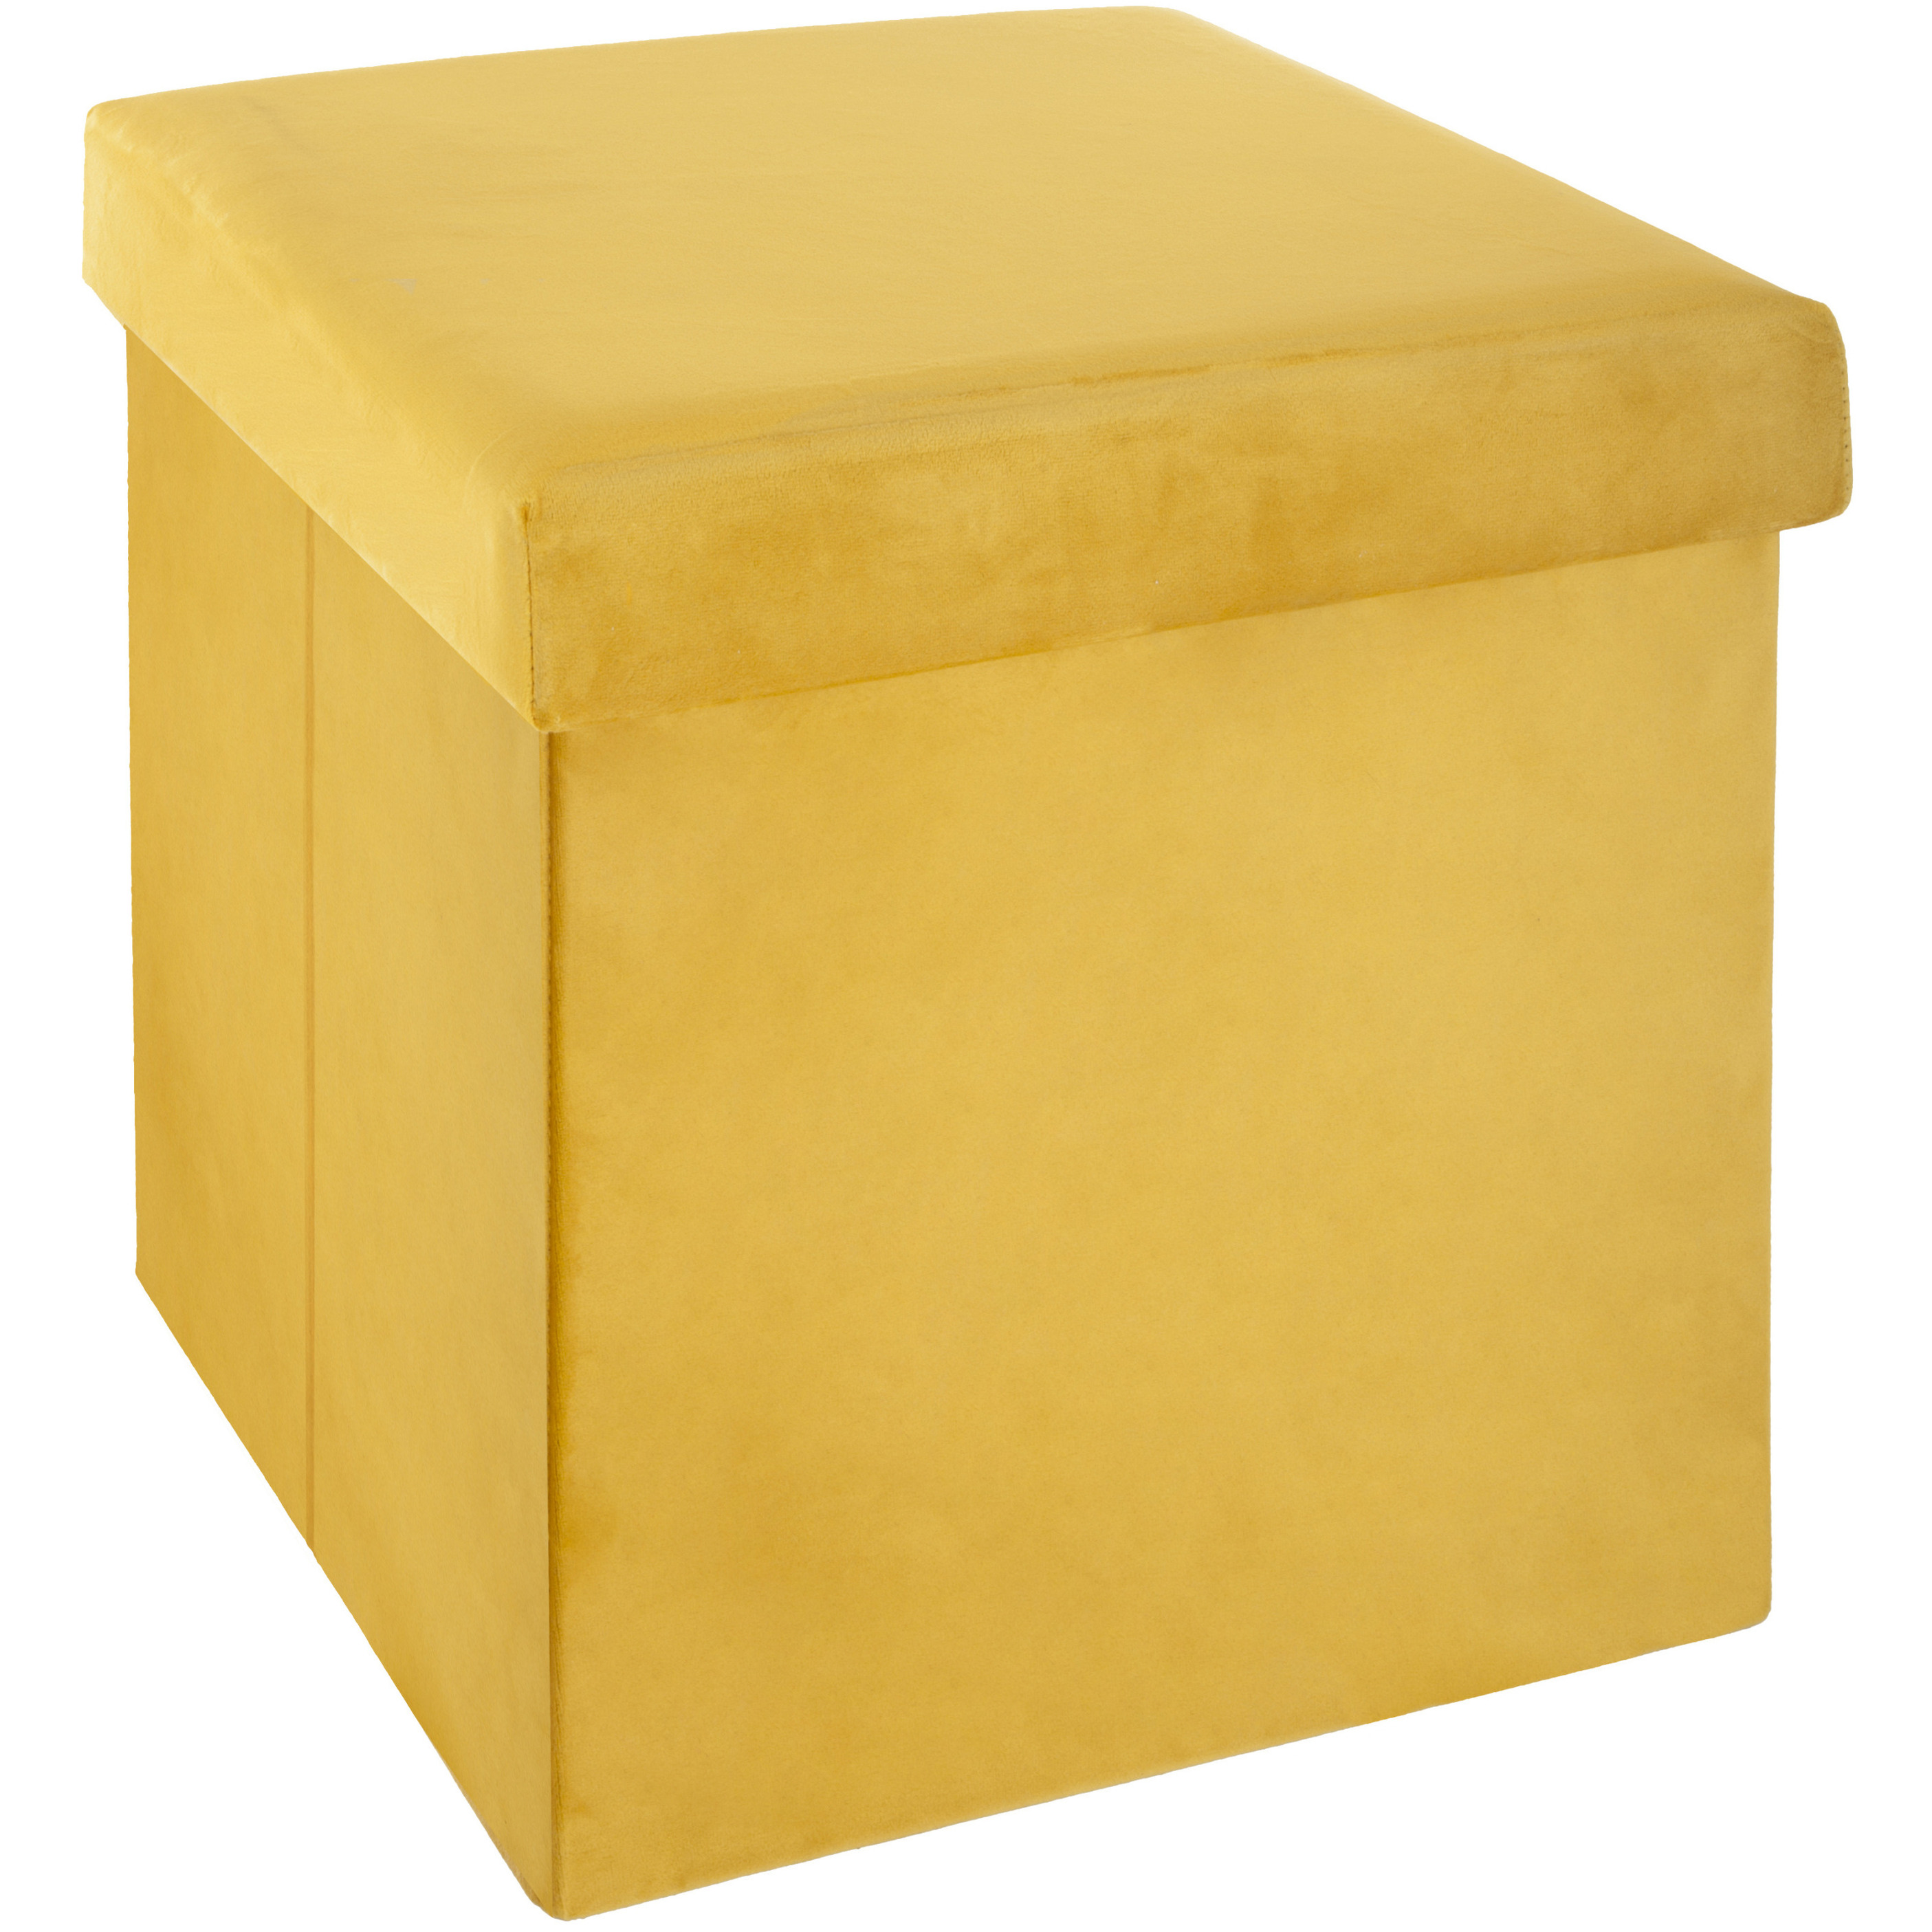 Poef-hocker opbergbox geel kunststof-mdf 38 x 38 x 38 cm opvouwbaar